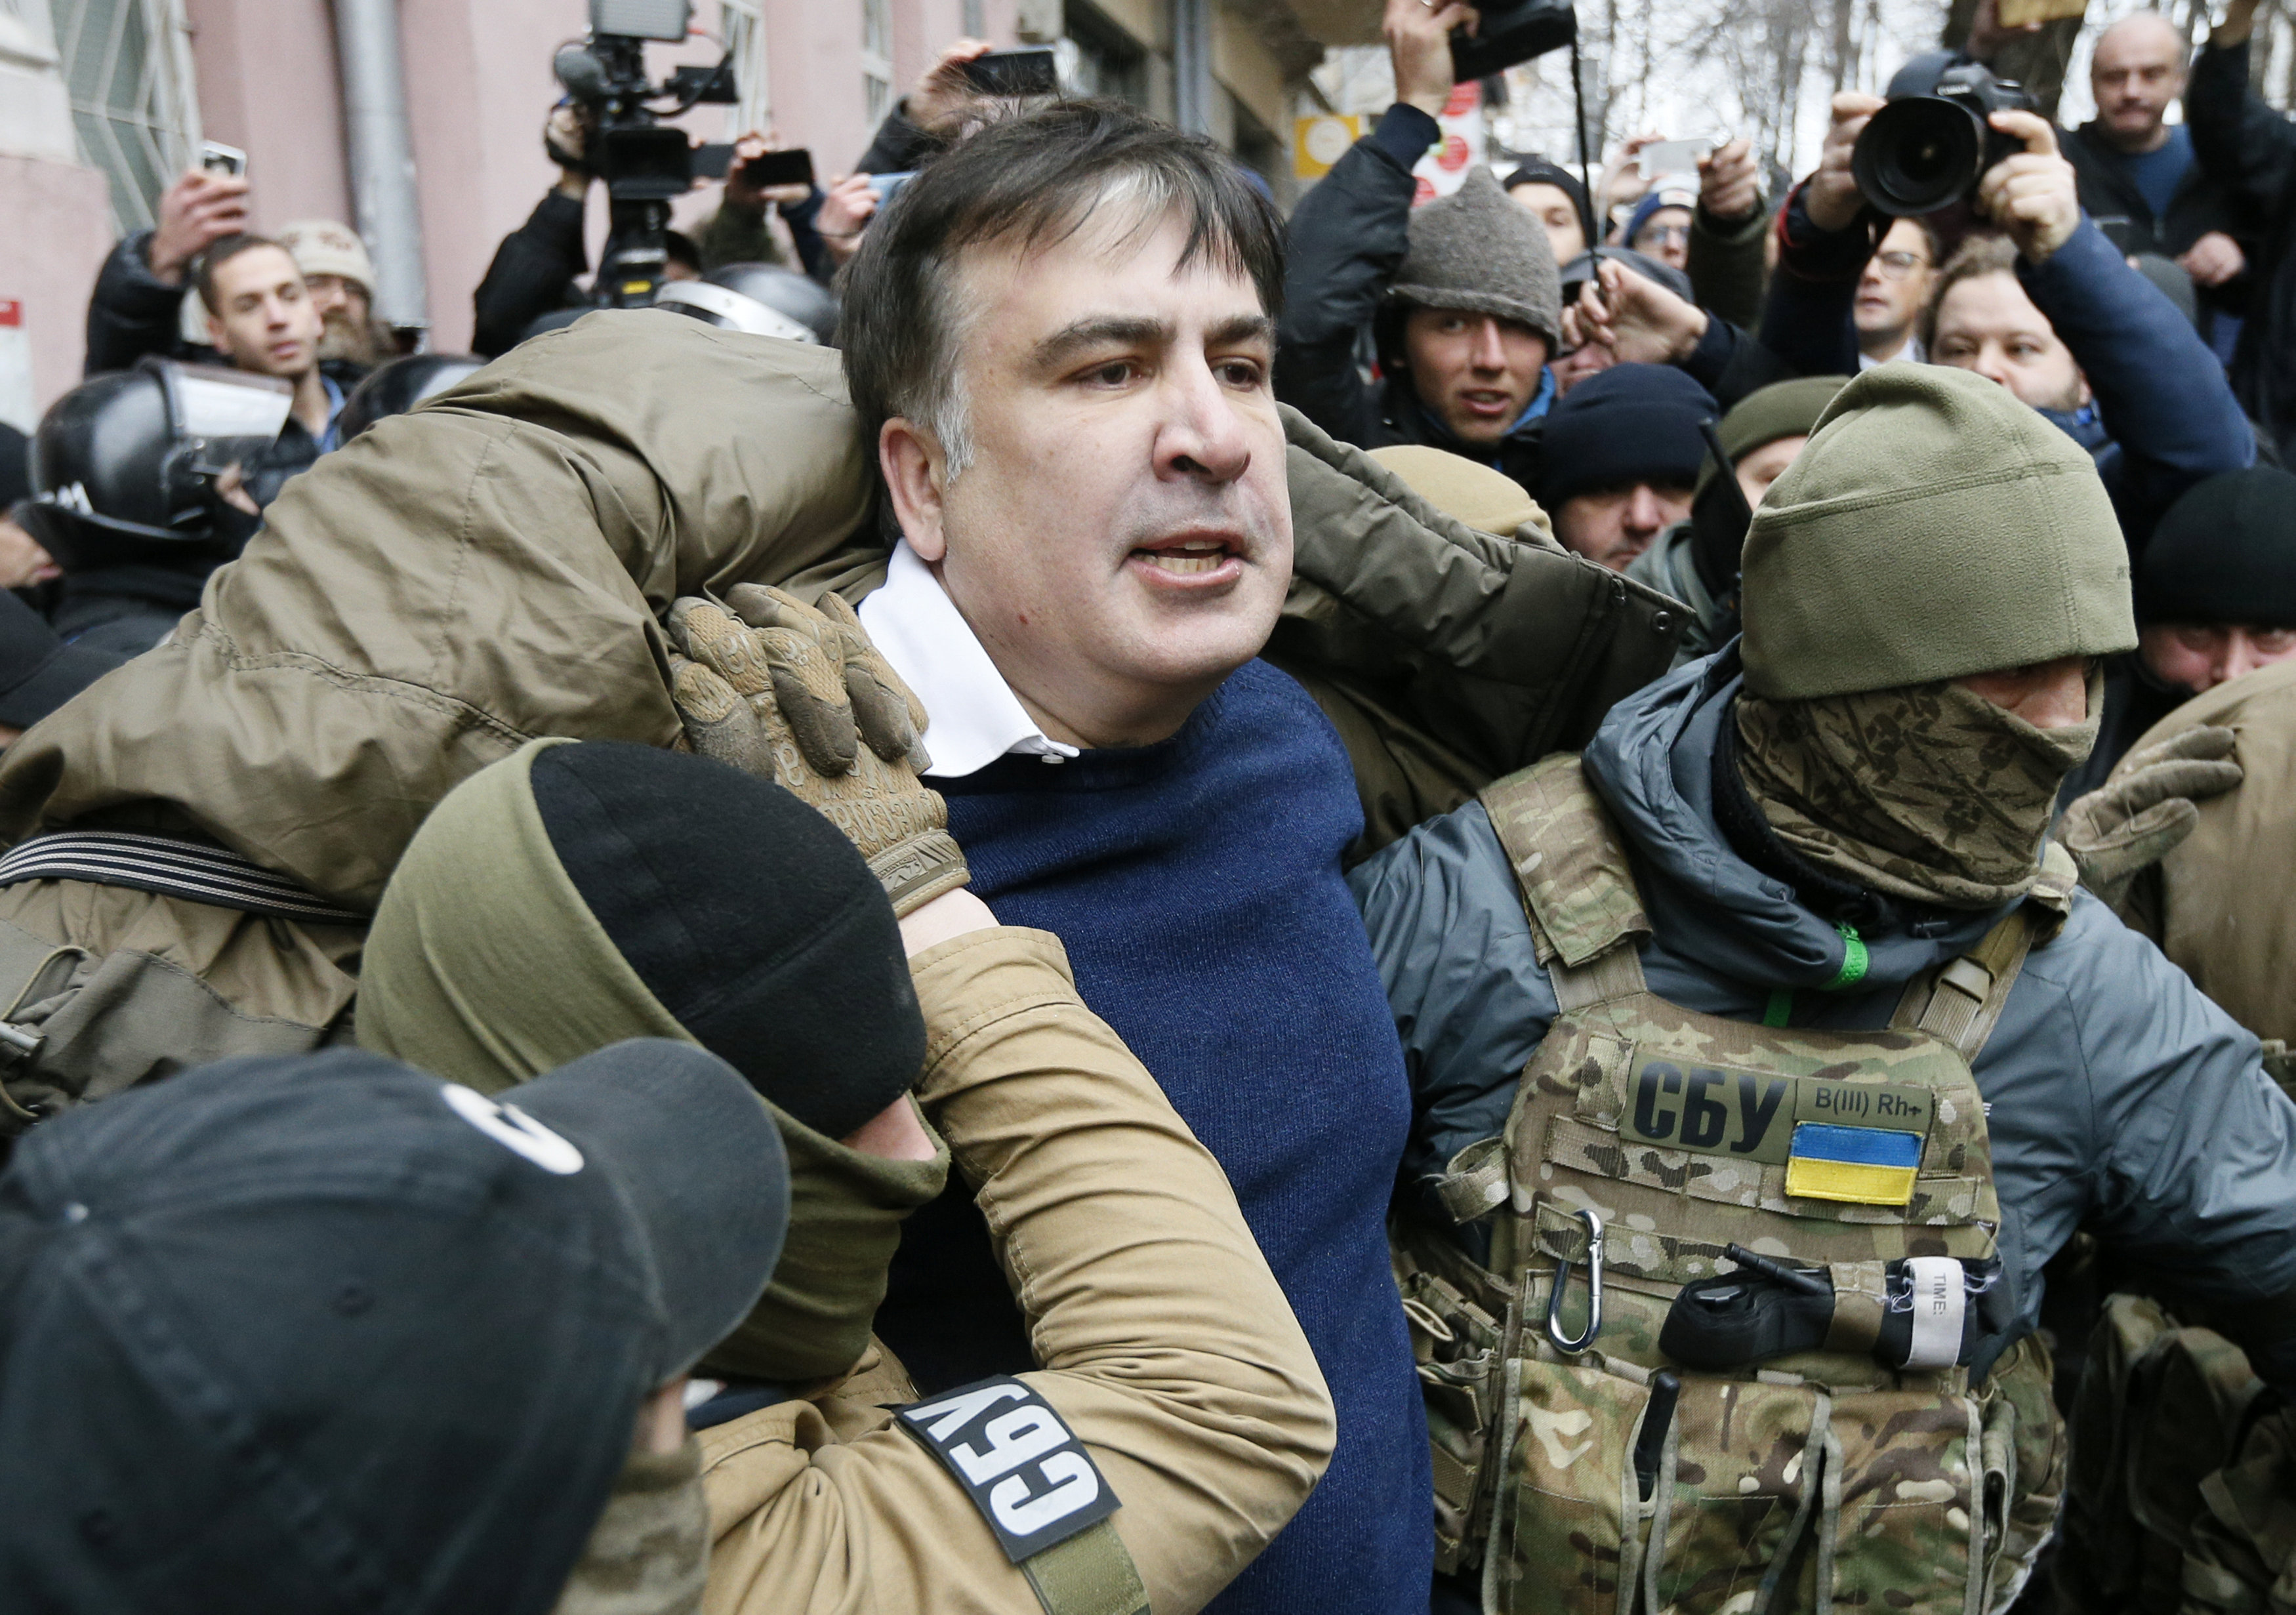 El expresidente georgiano Saakashvili detenido en Ucrania acusado de golpismo